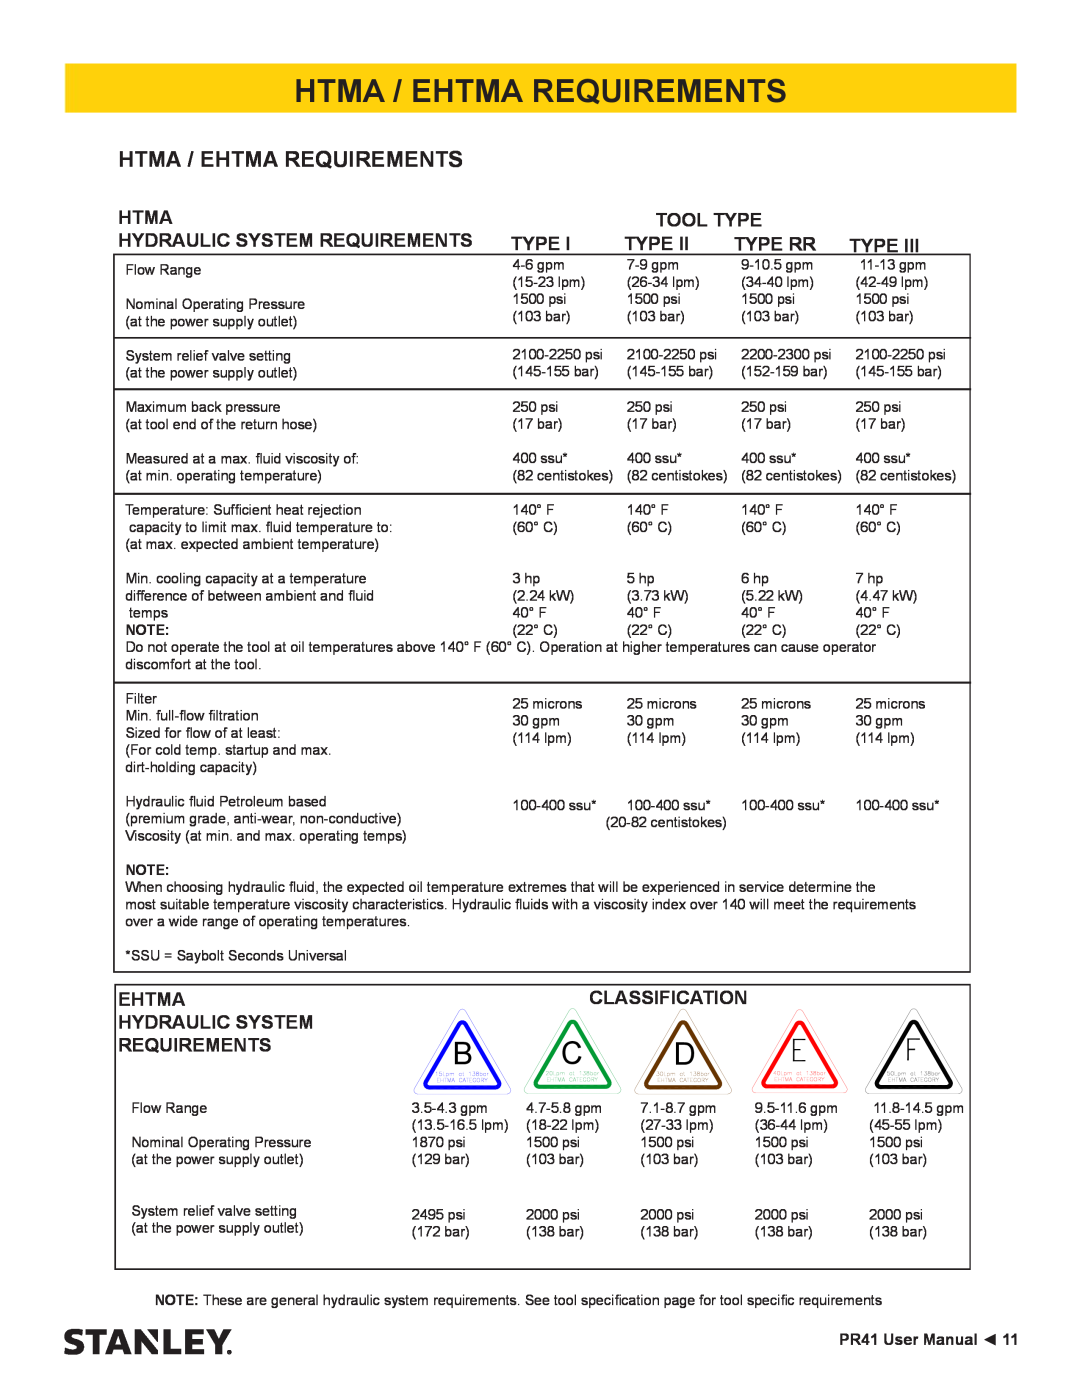 Stanley Black & Decker PR41 manual Htma / Ehtma Requirements 